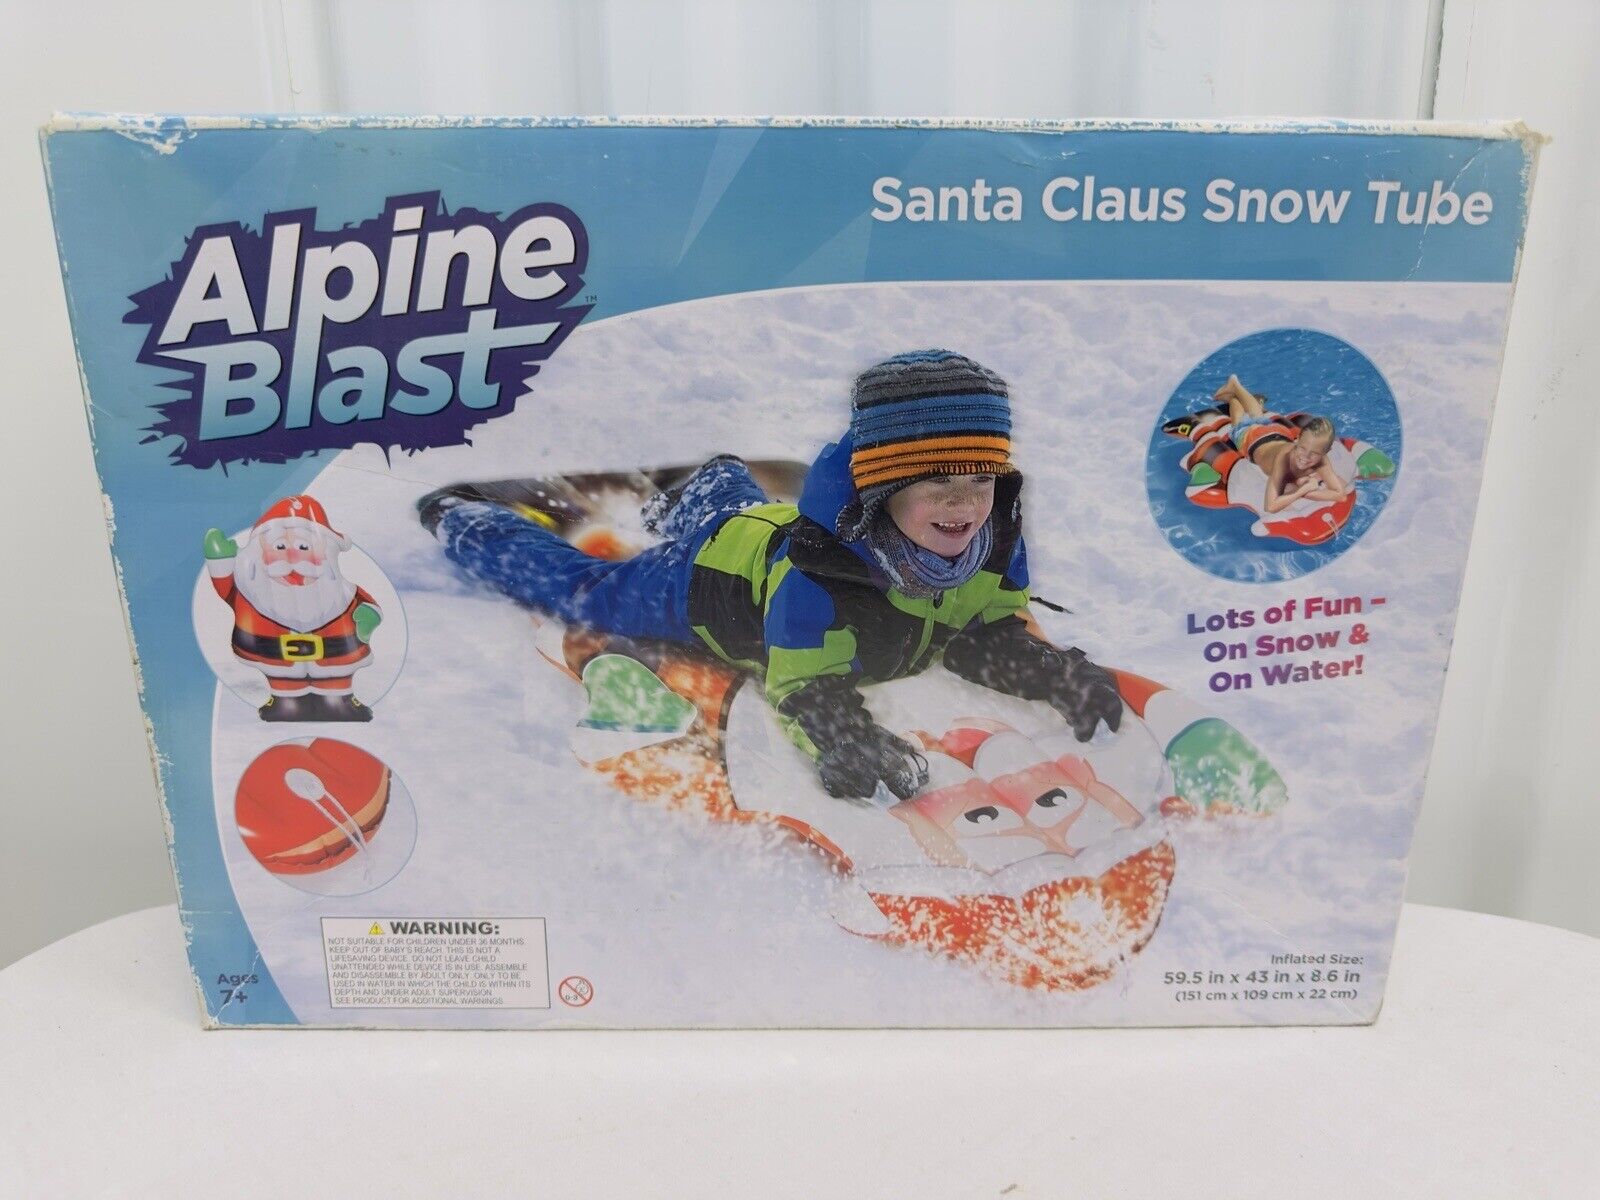 ALPINE BLAST SANTA CLAUS SNOW/WATER FUN TUBE - NEW UNOPENED BOX